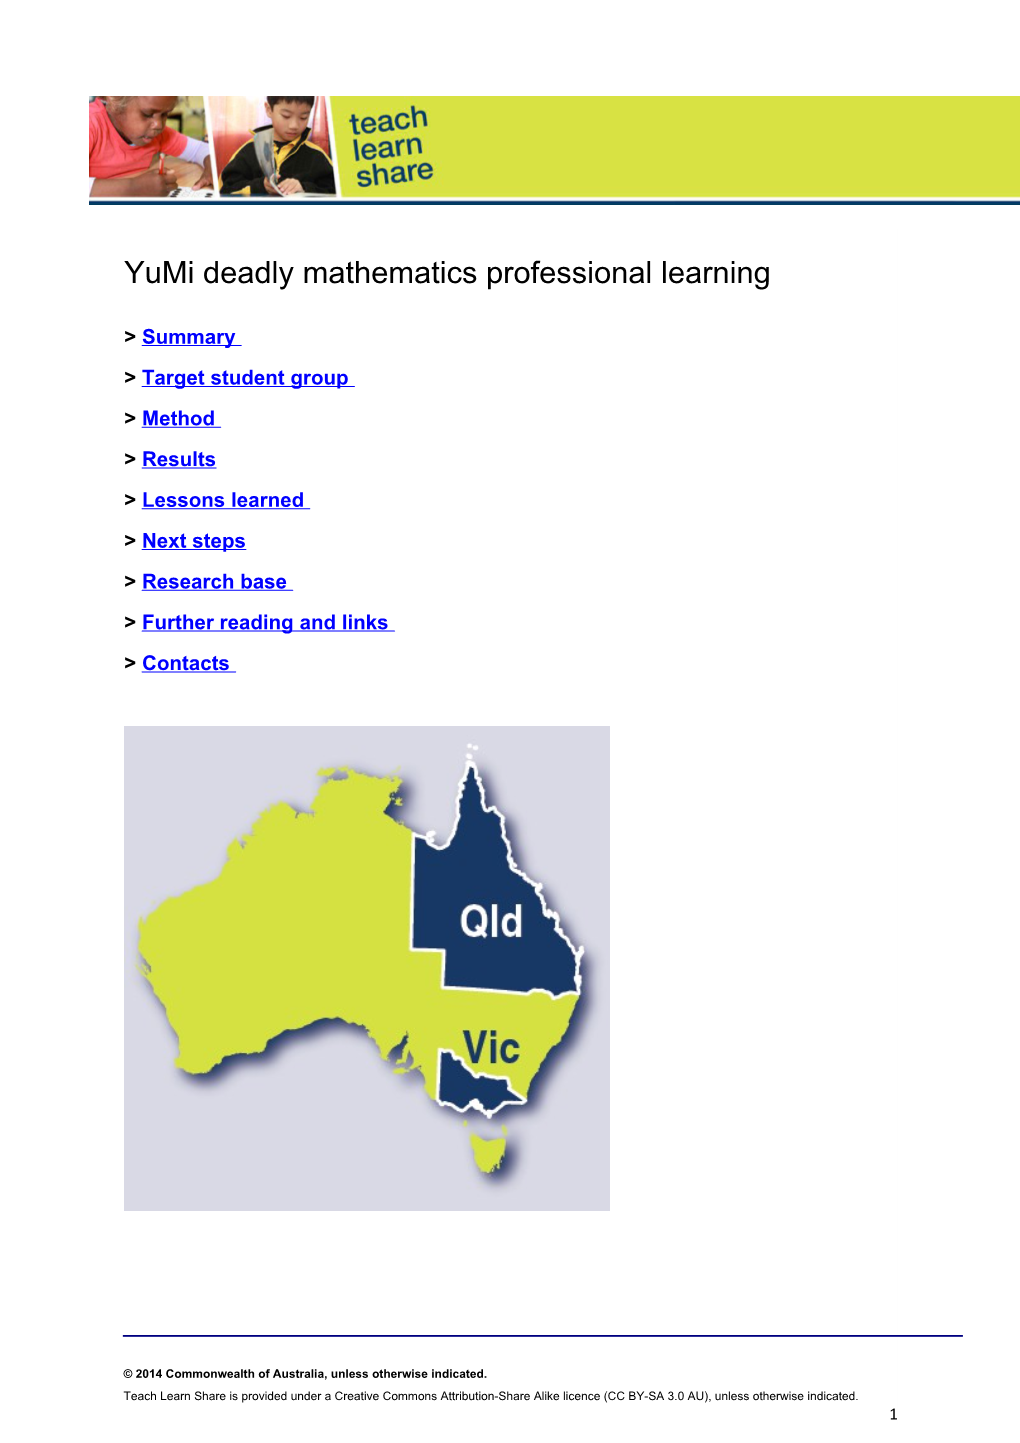 Yumi Deadly Mathematics Professional Learning